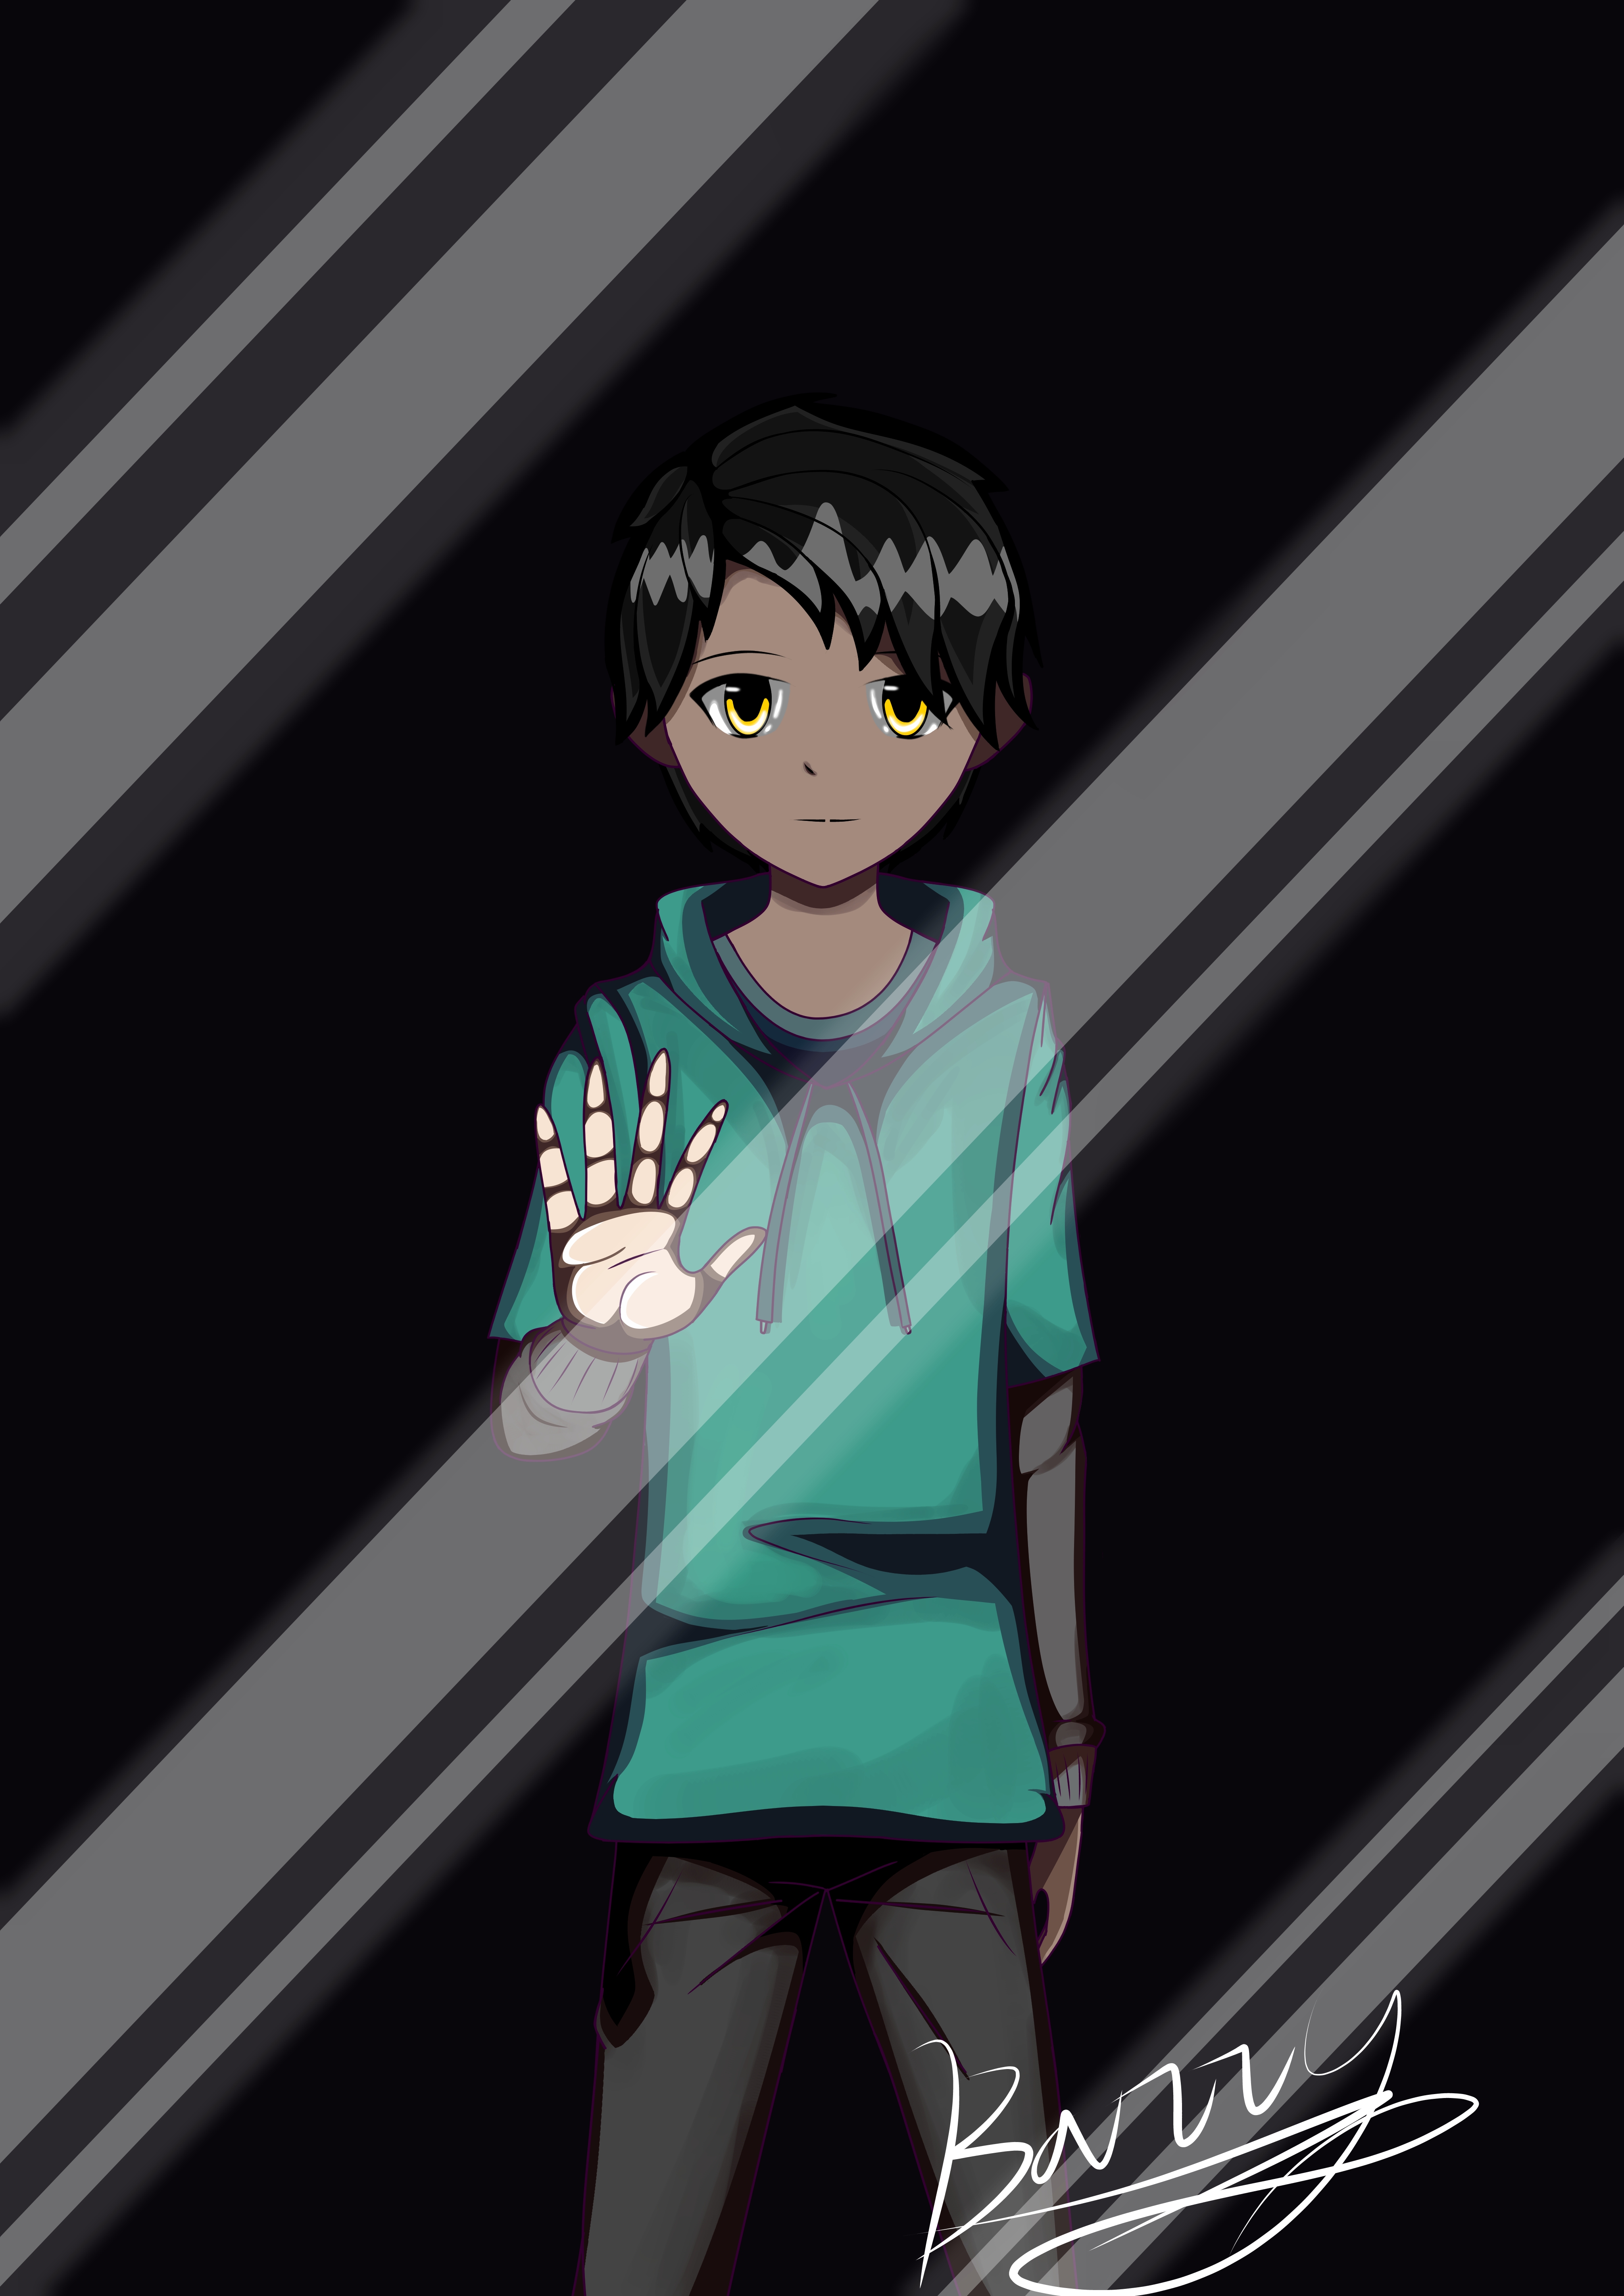 Anime boy icon by yunokamado on DeviantArt